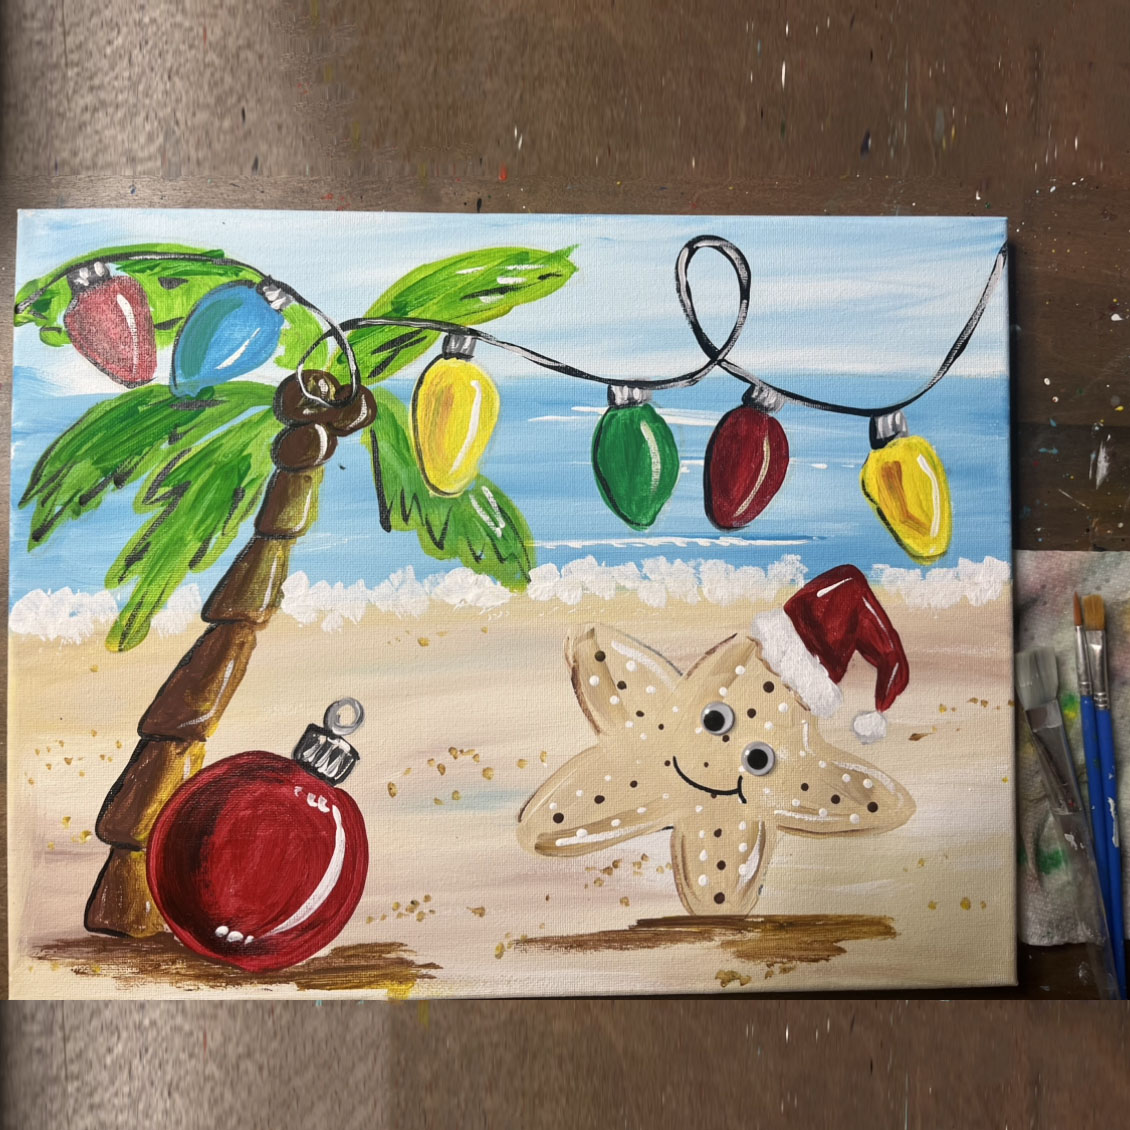 Shop Kids Canvas Paint Kits  Pre-Drawn Canvas for More Fun